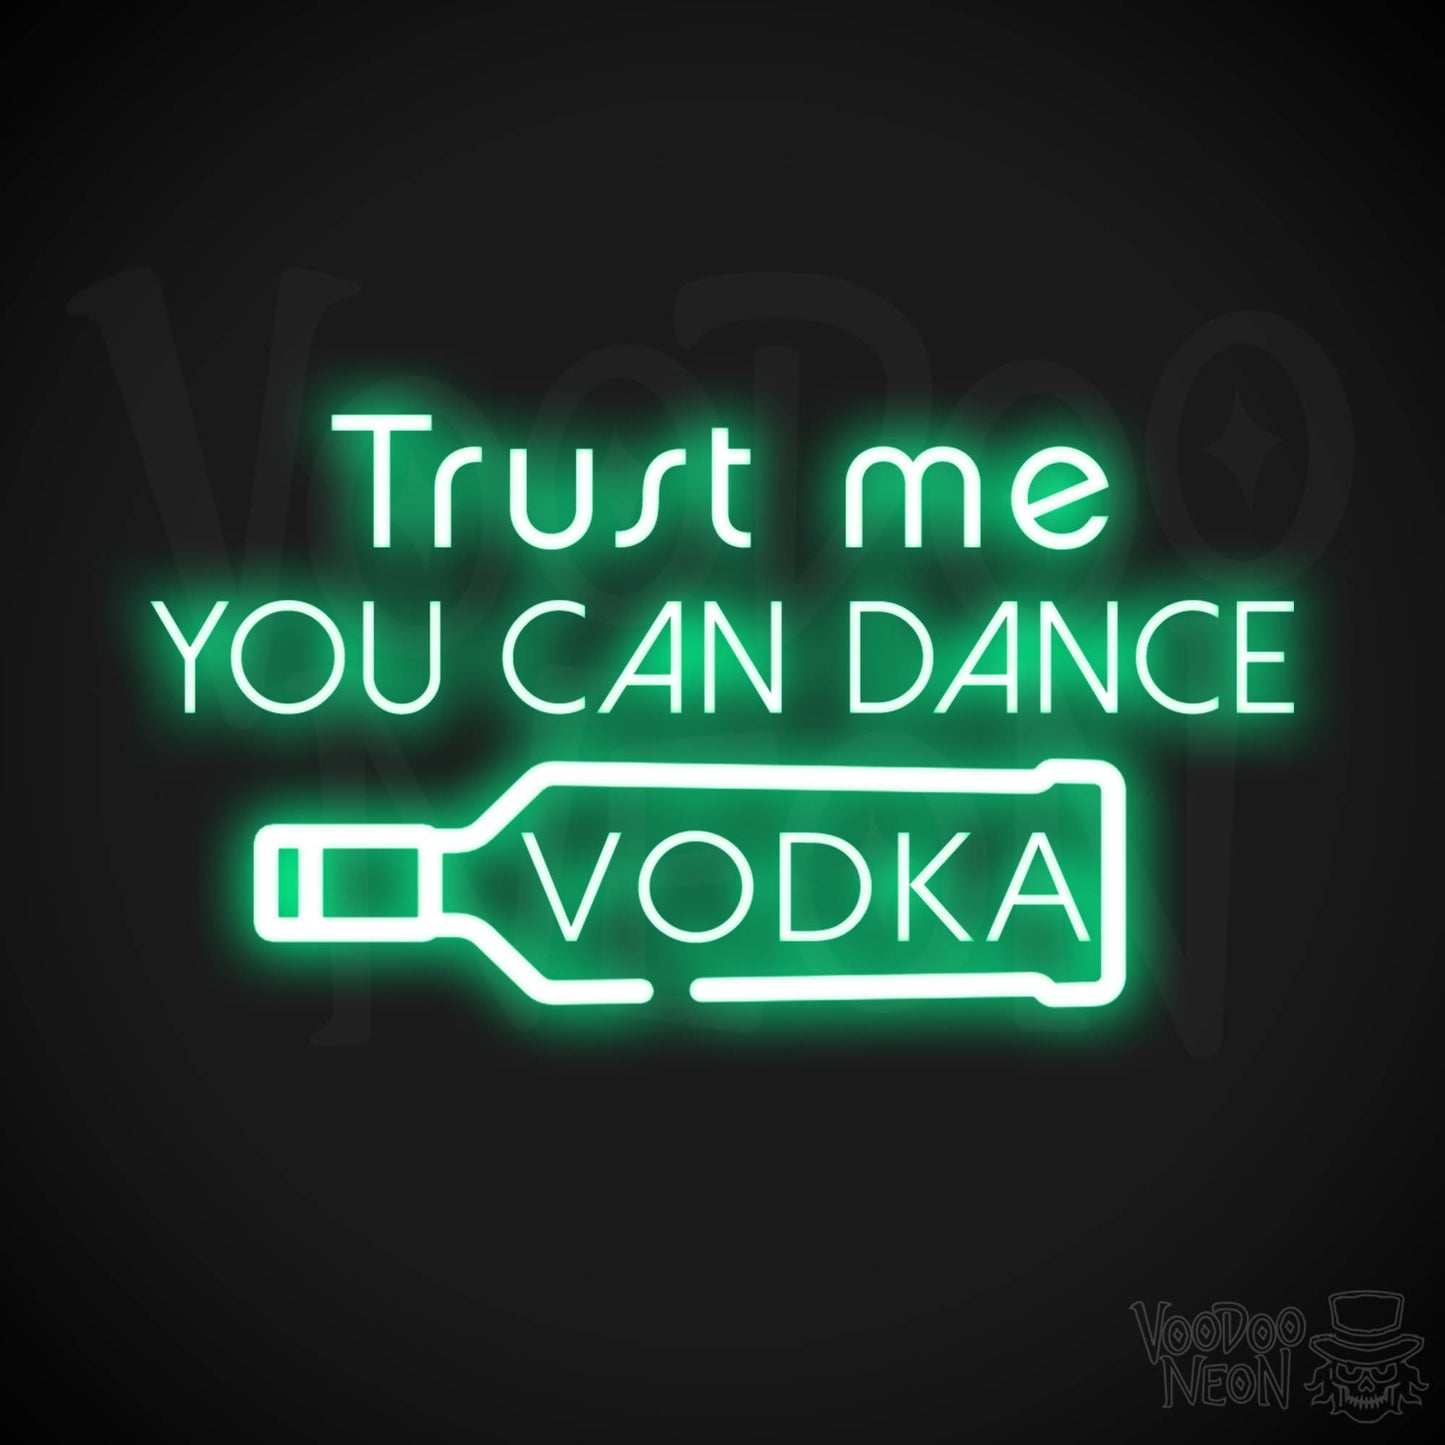 Trust Me You Can Dance Vodka Neon Sign - Vodka Bar Sign - LED Signs - Color Green